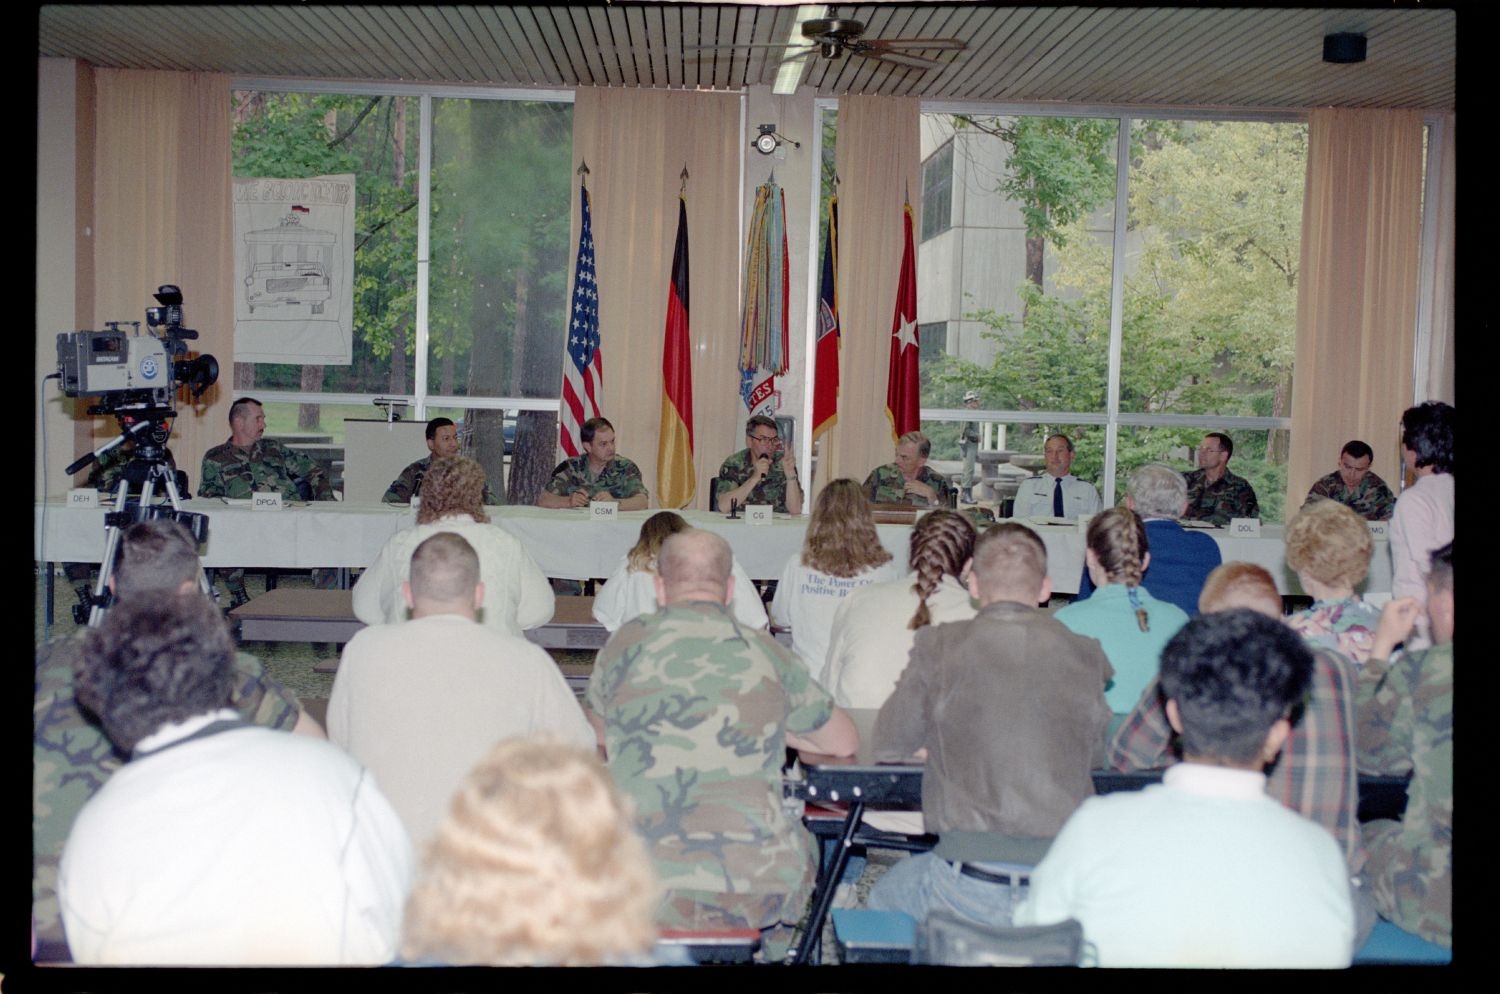 Fotografie: Town Hall Meeting der US-Community mit Brigadier General Sidney Shachnow in der Berlin American High School in Berlin-Dahlem (AlliiertenMuseum/U.S. Army Photograph Public Domain Mark)